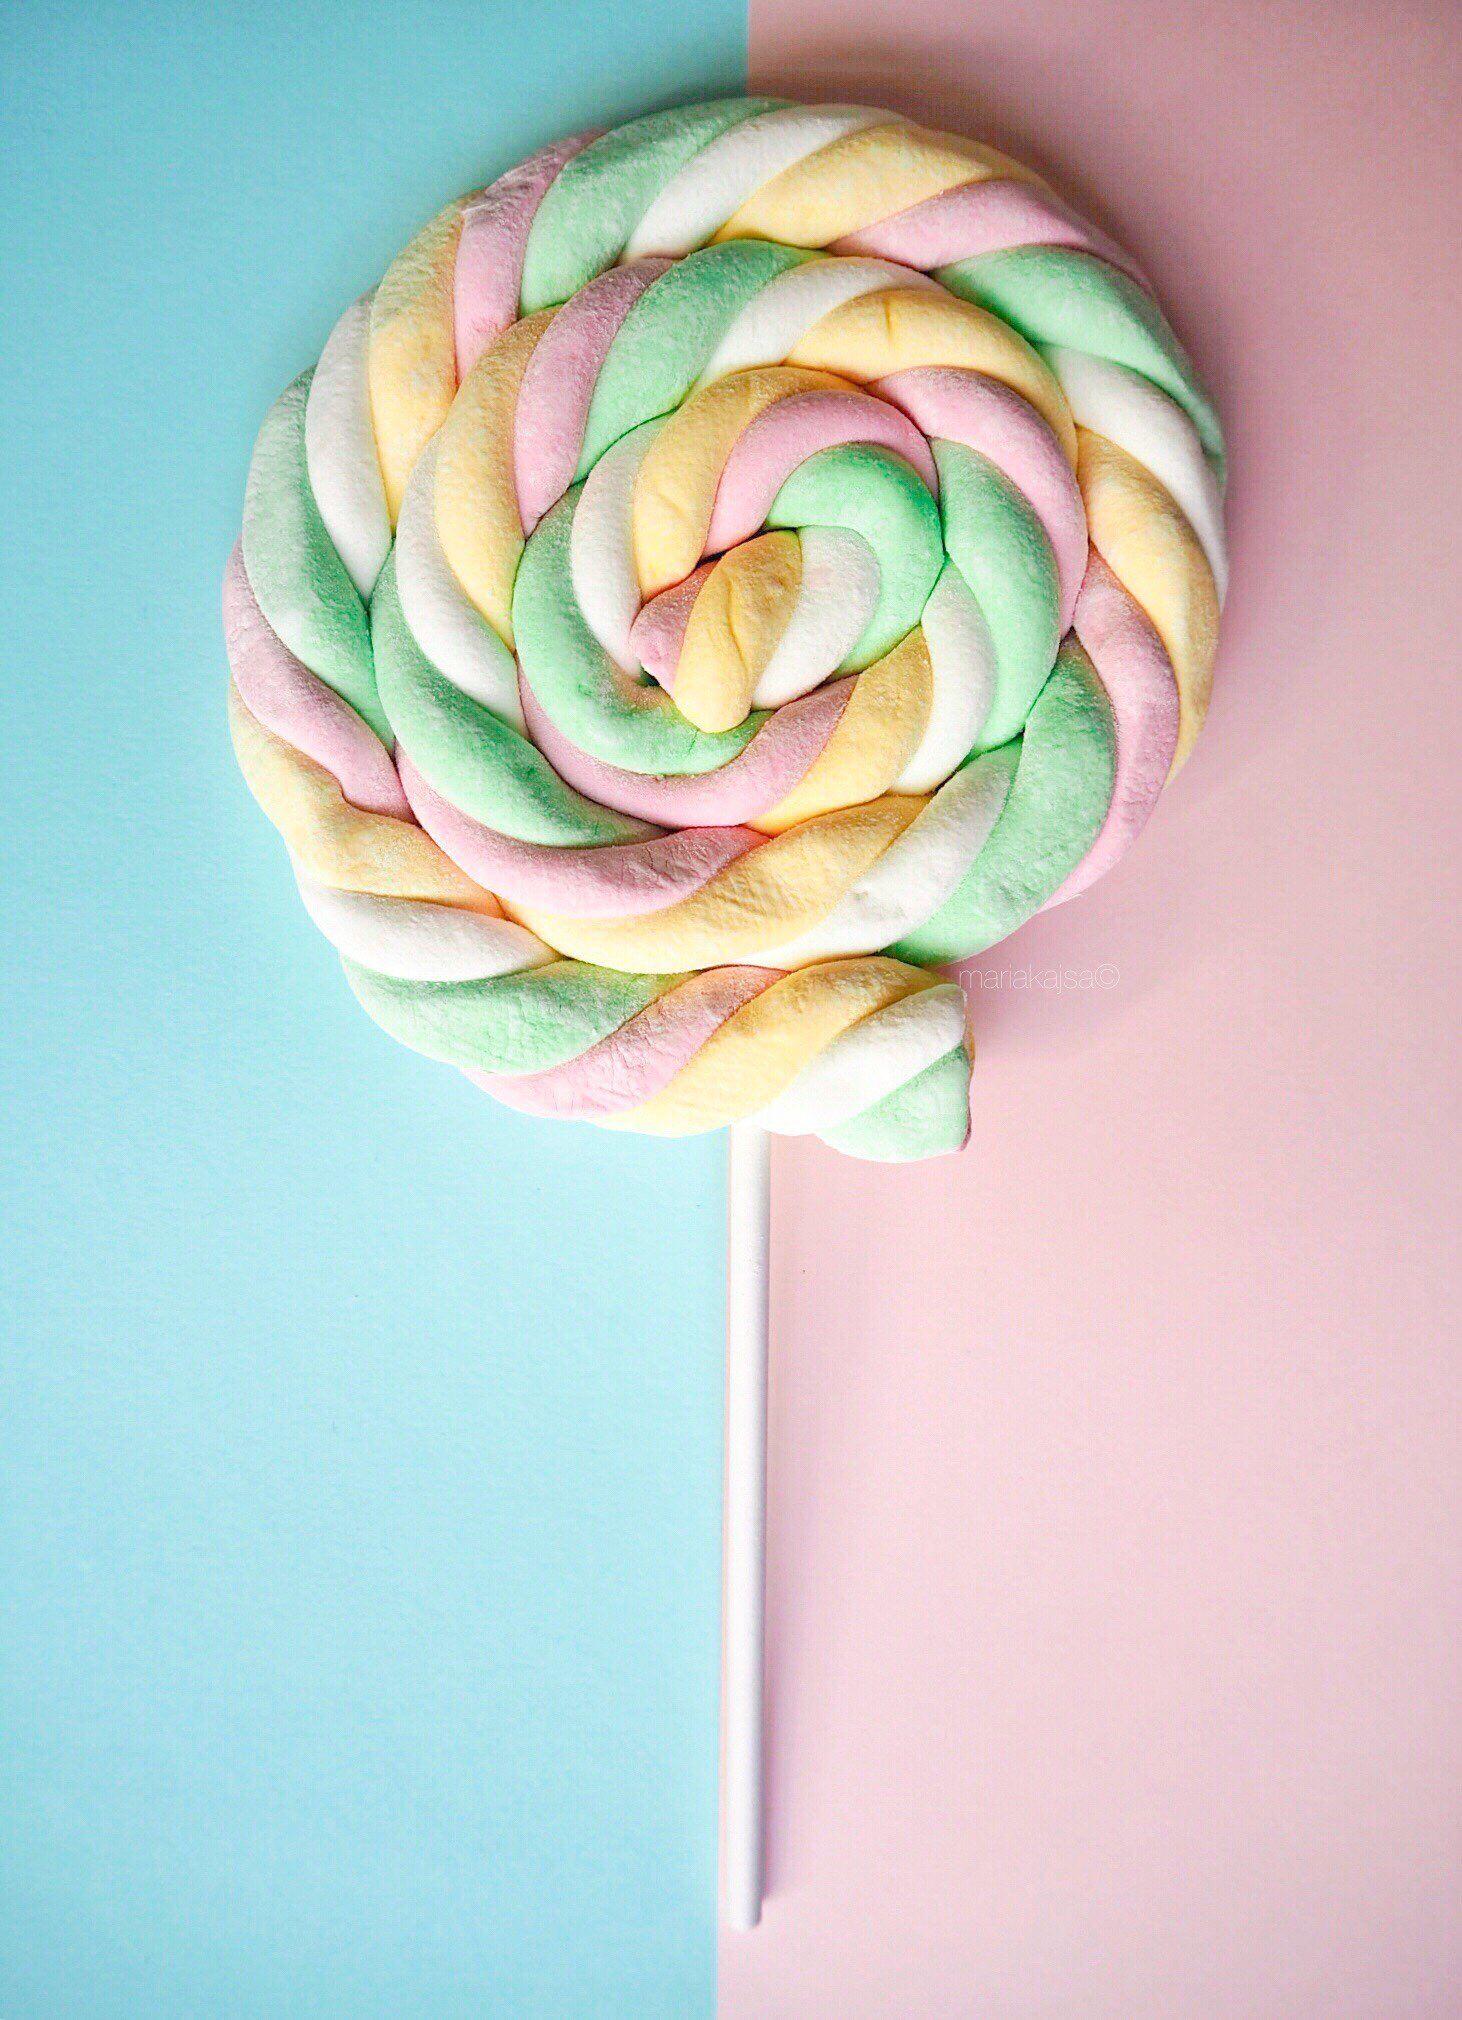 Pastel Candy Lollipop Wallpaper.com